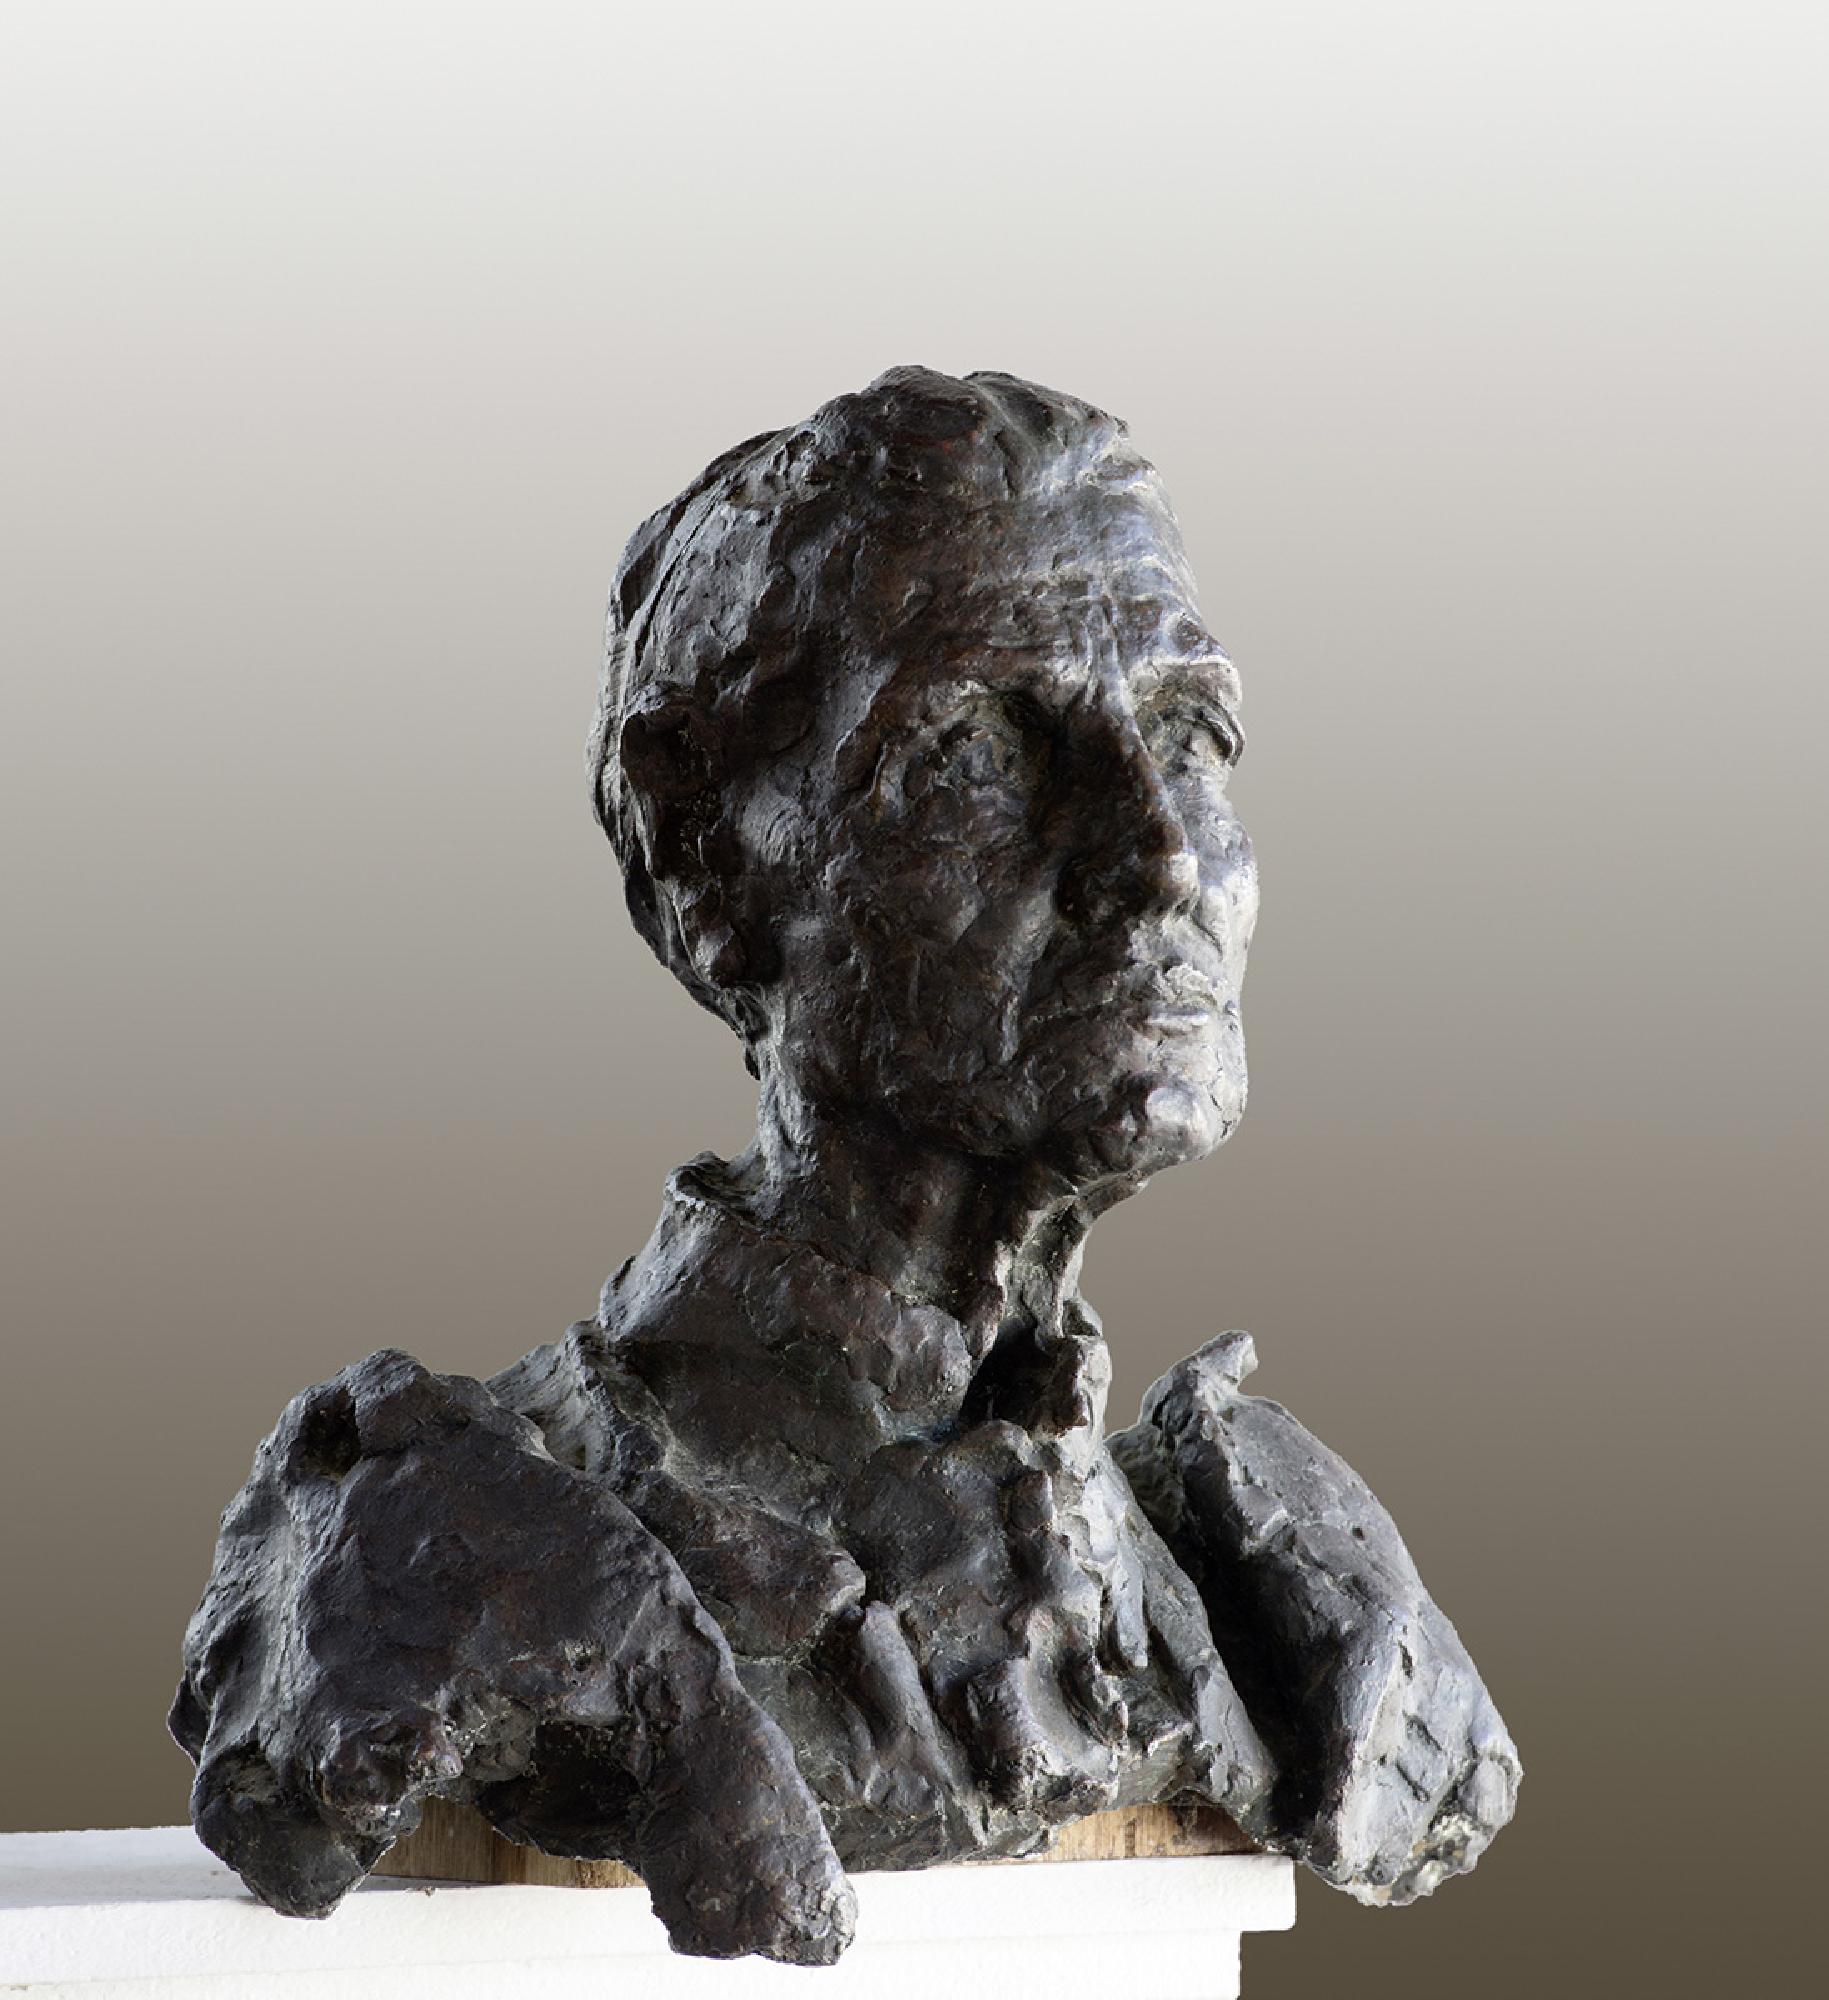 Leonard Lorenz: 
1976
45 × 40 cm
bronze